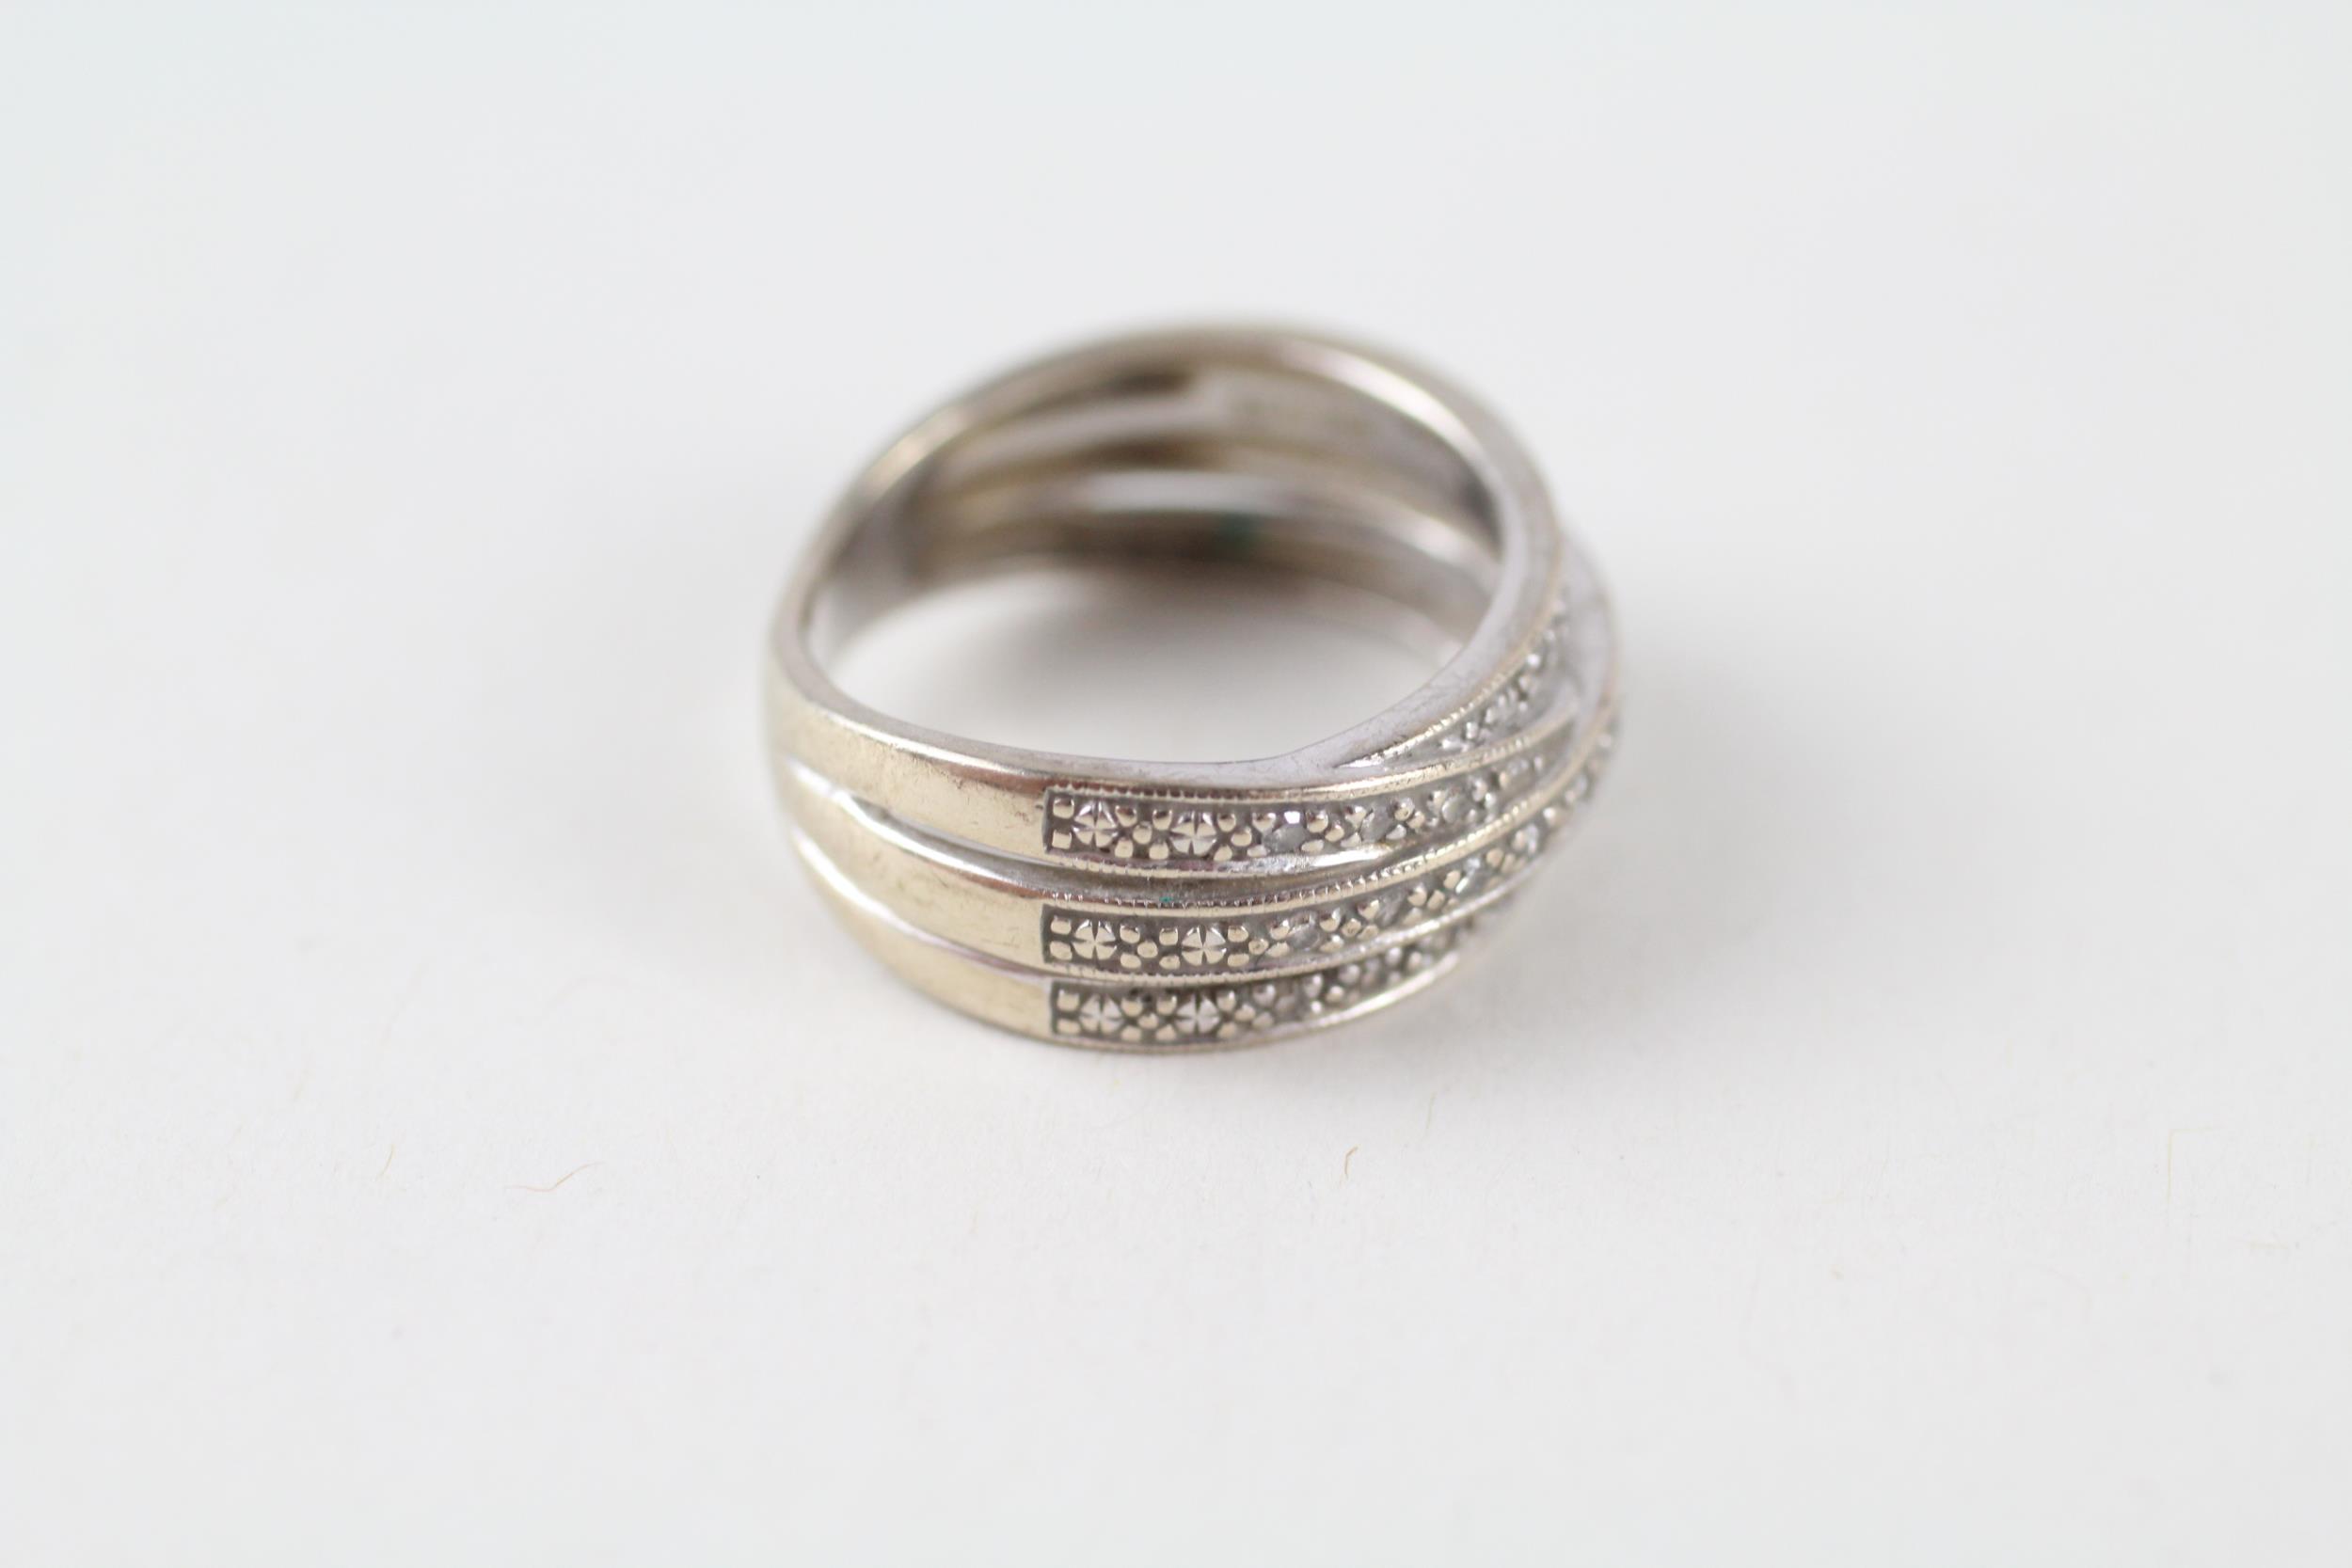 9ct white gold diamond dress ring (3.5g) Size I 1/2 - Image 2 of 4